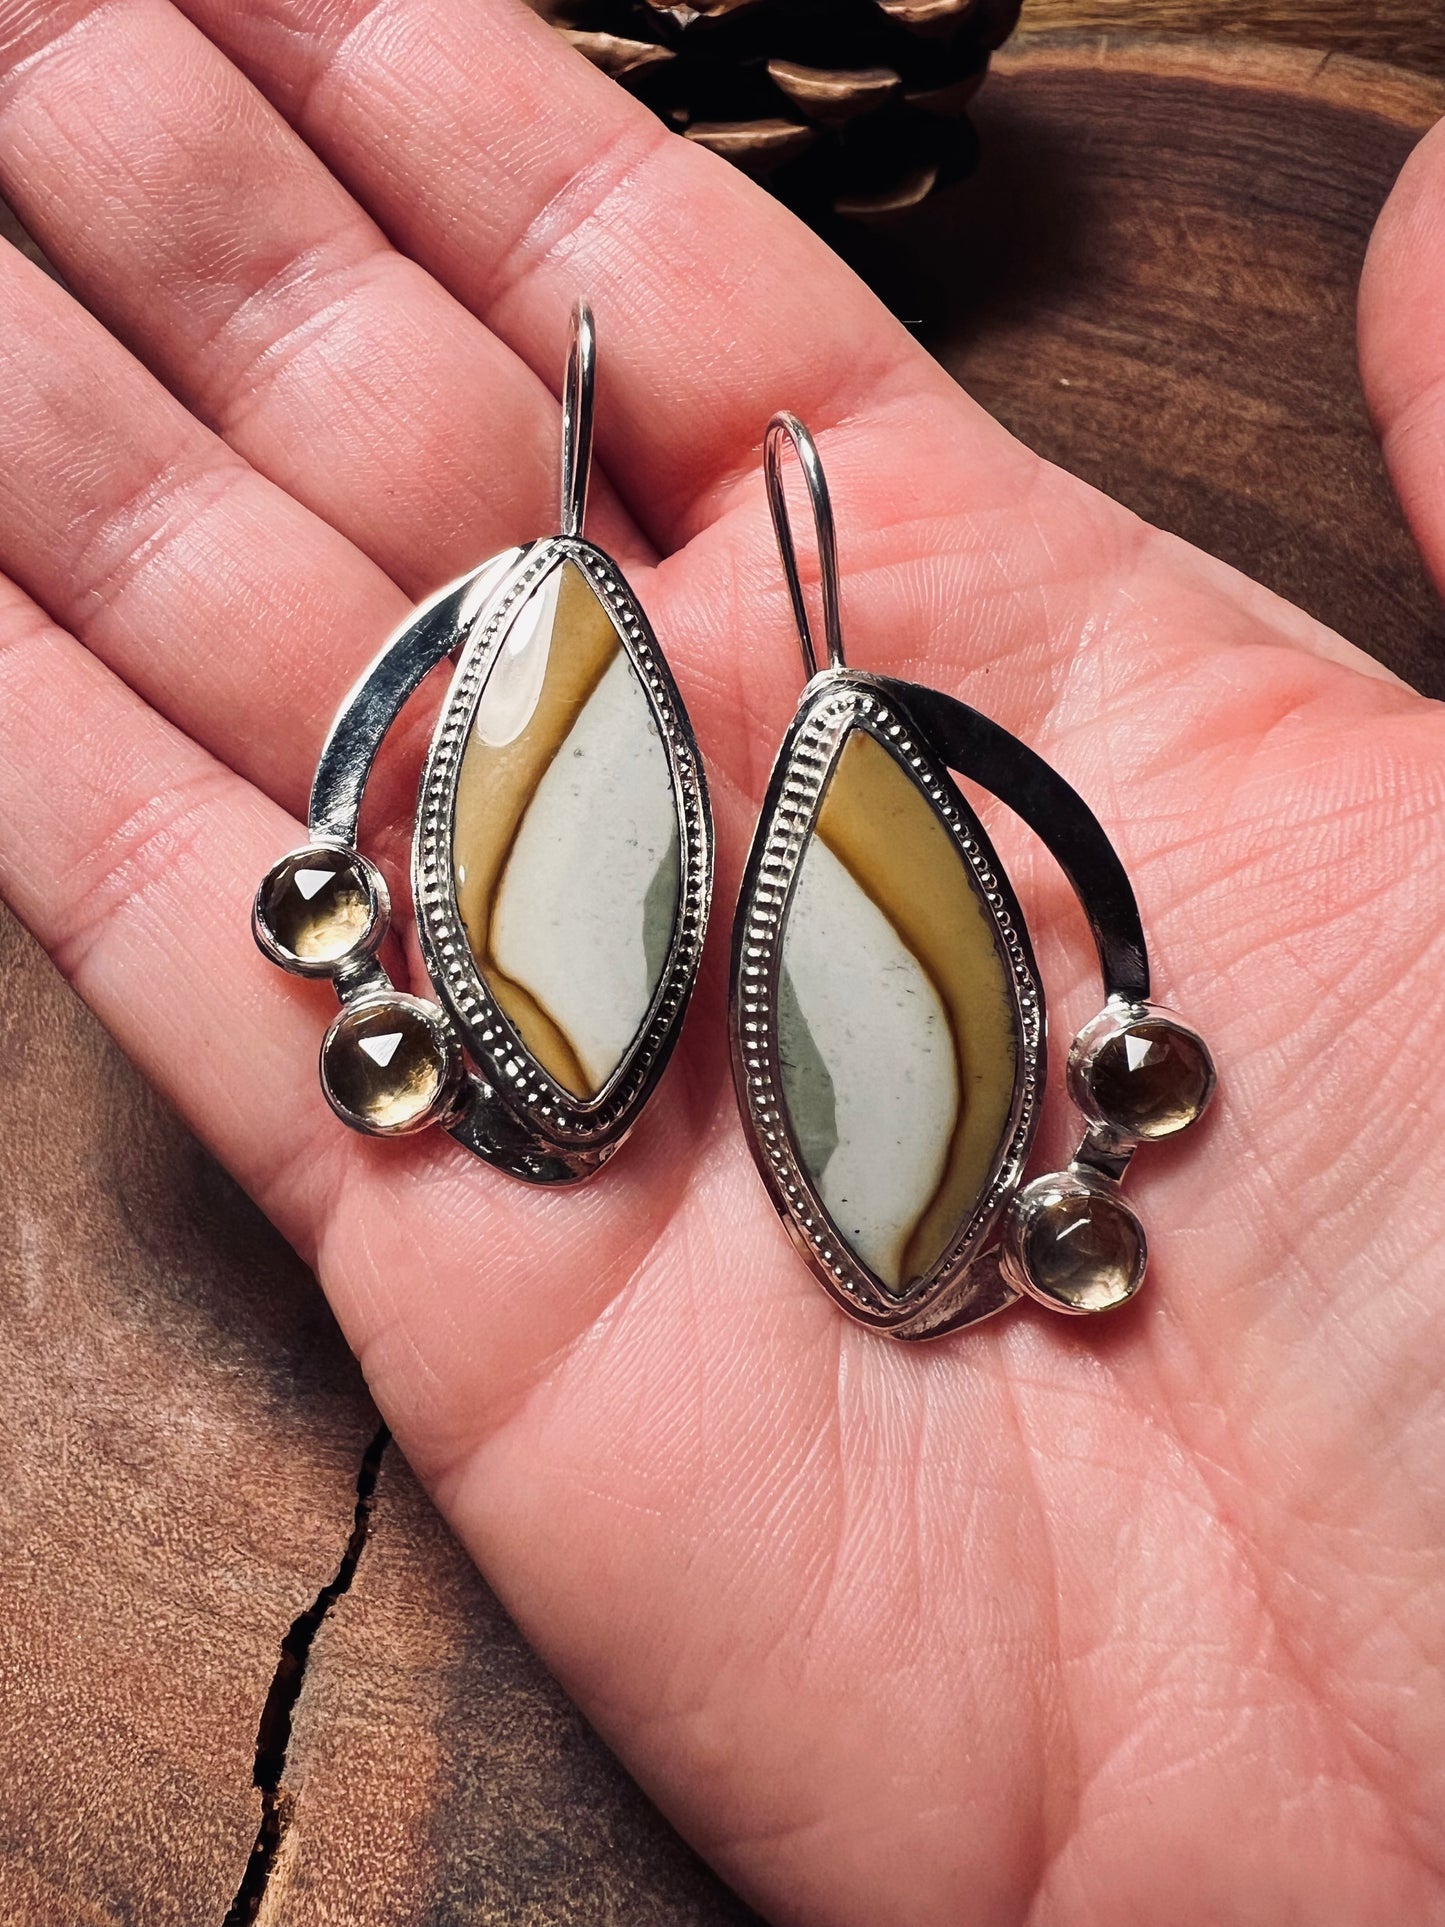 Polychrome Jasper and Citrine Sterling Silver Earrings